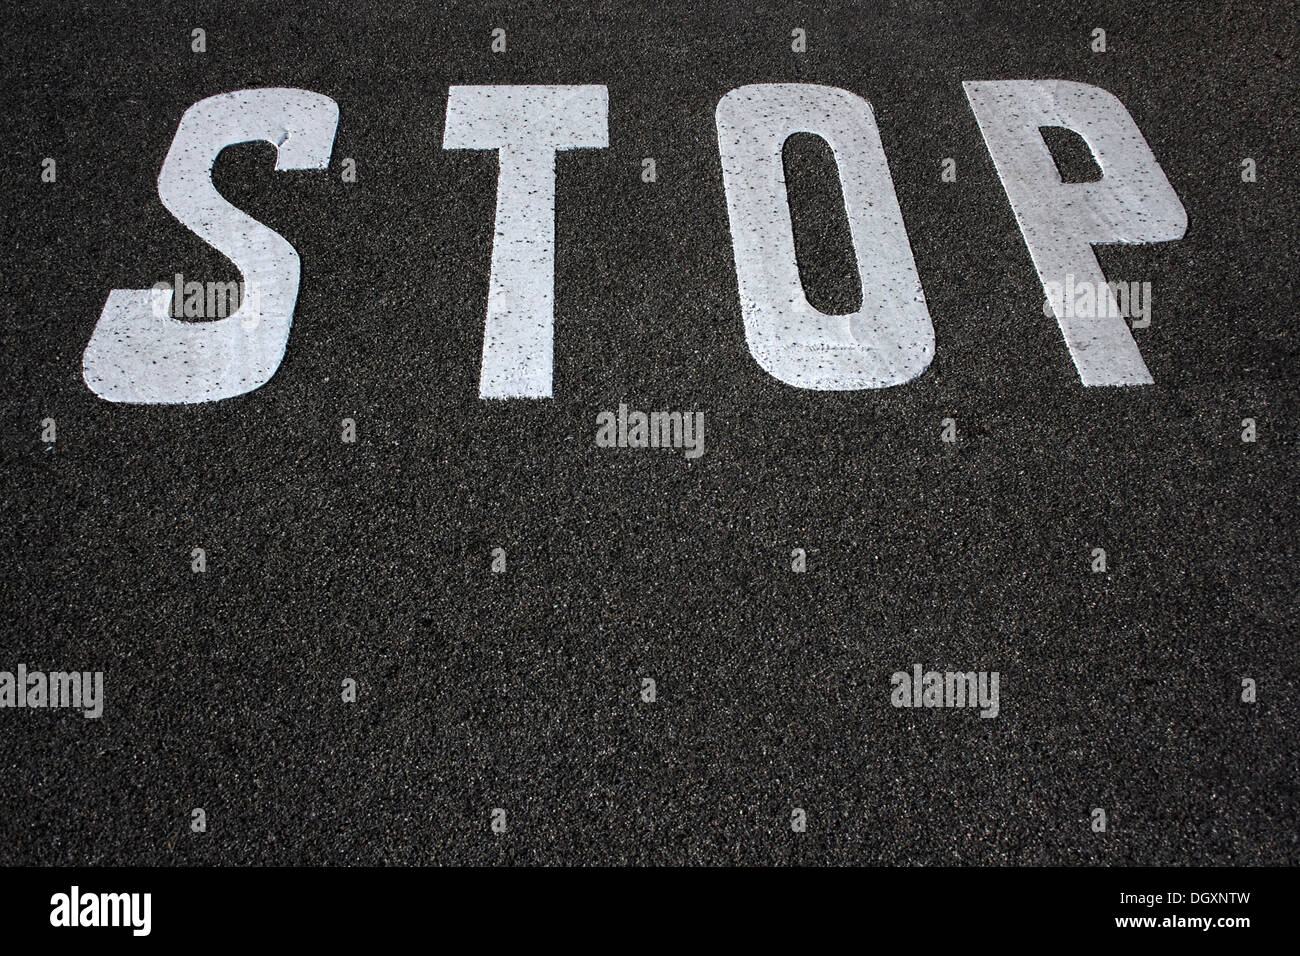 Road markings, ground markings, stop notice on asphalt Stock Photo